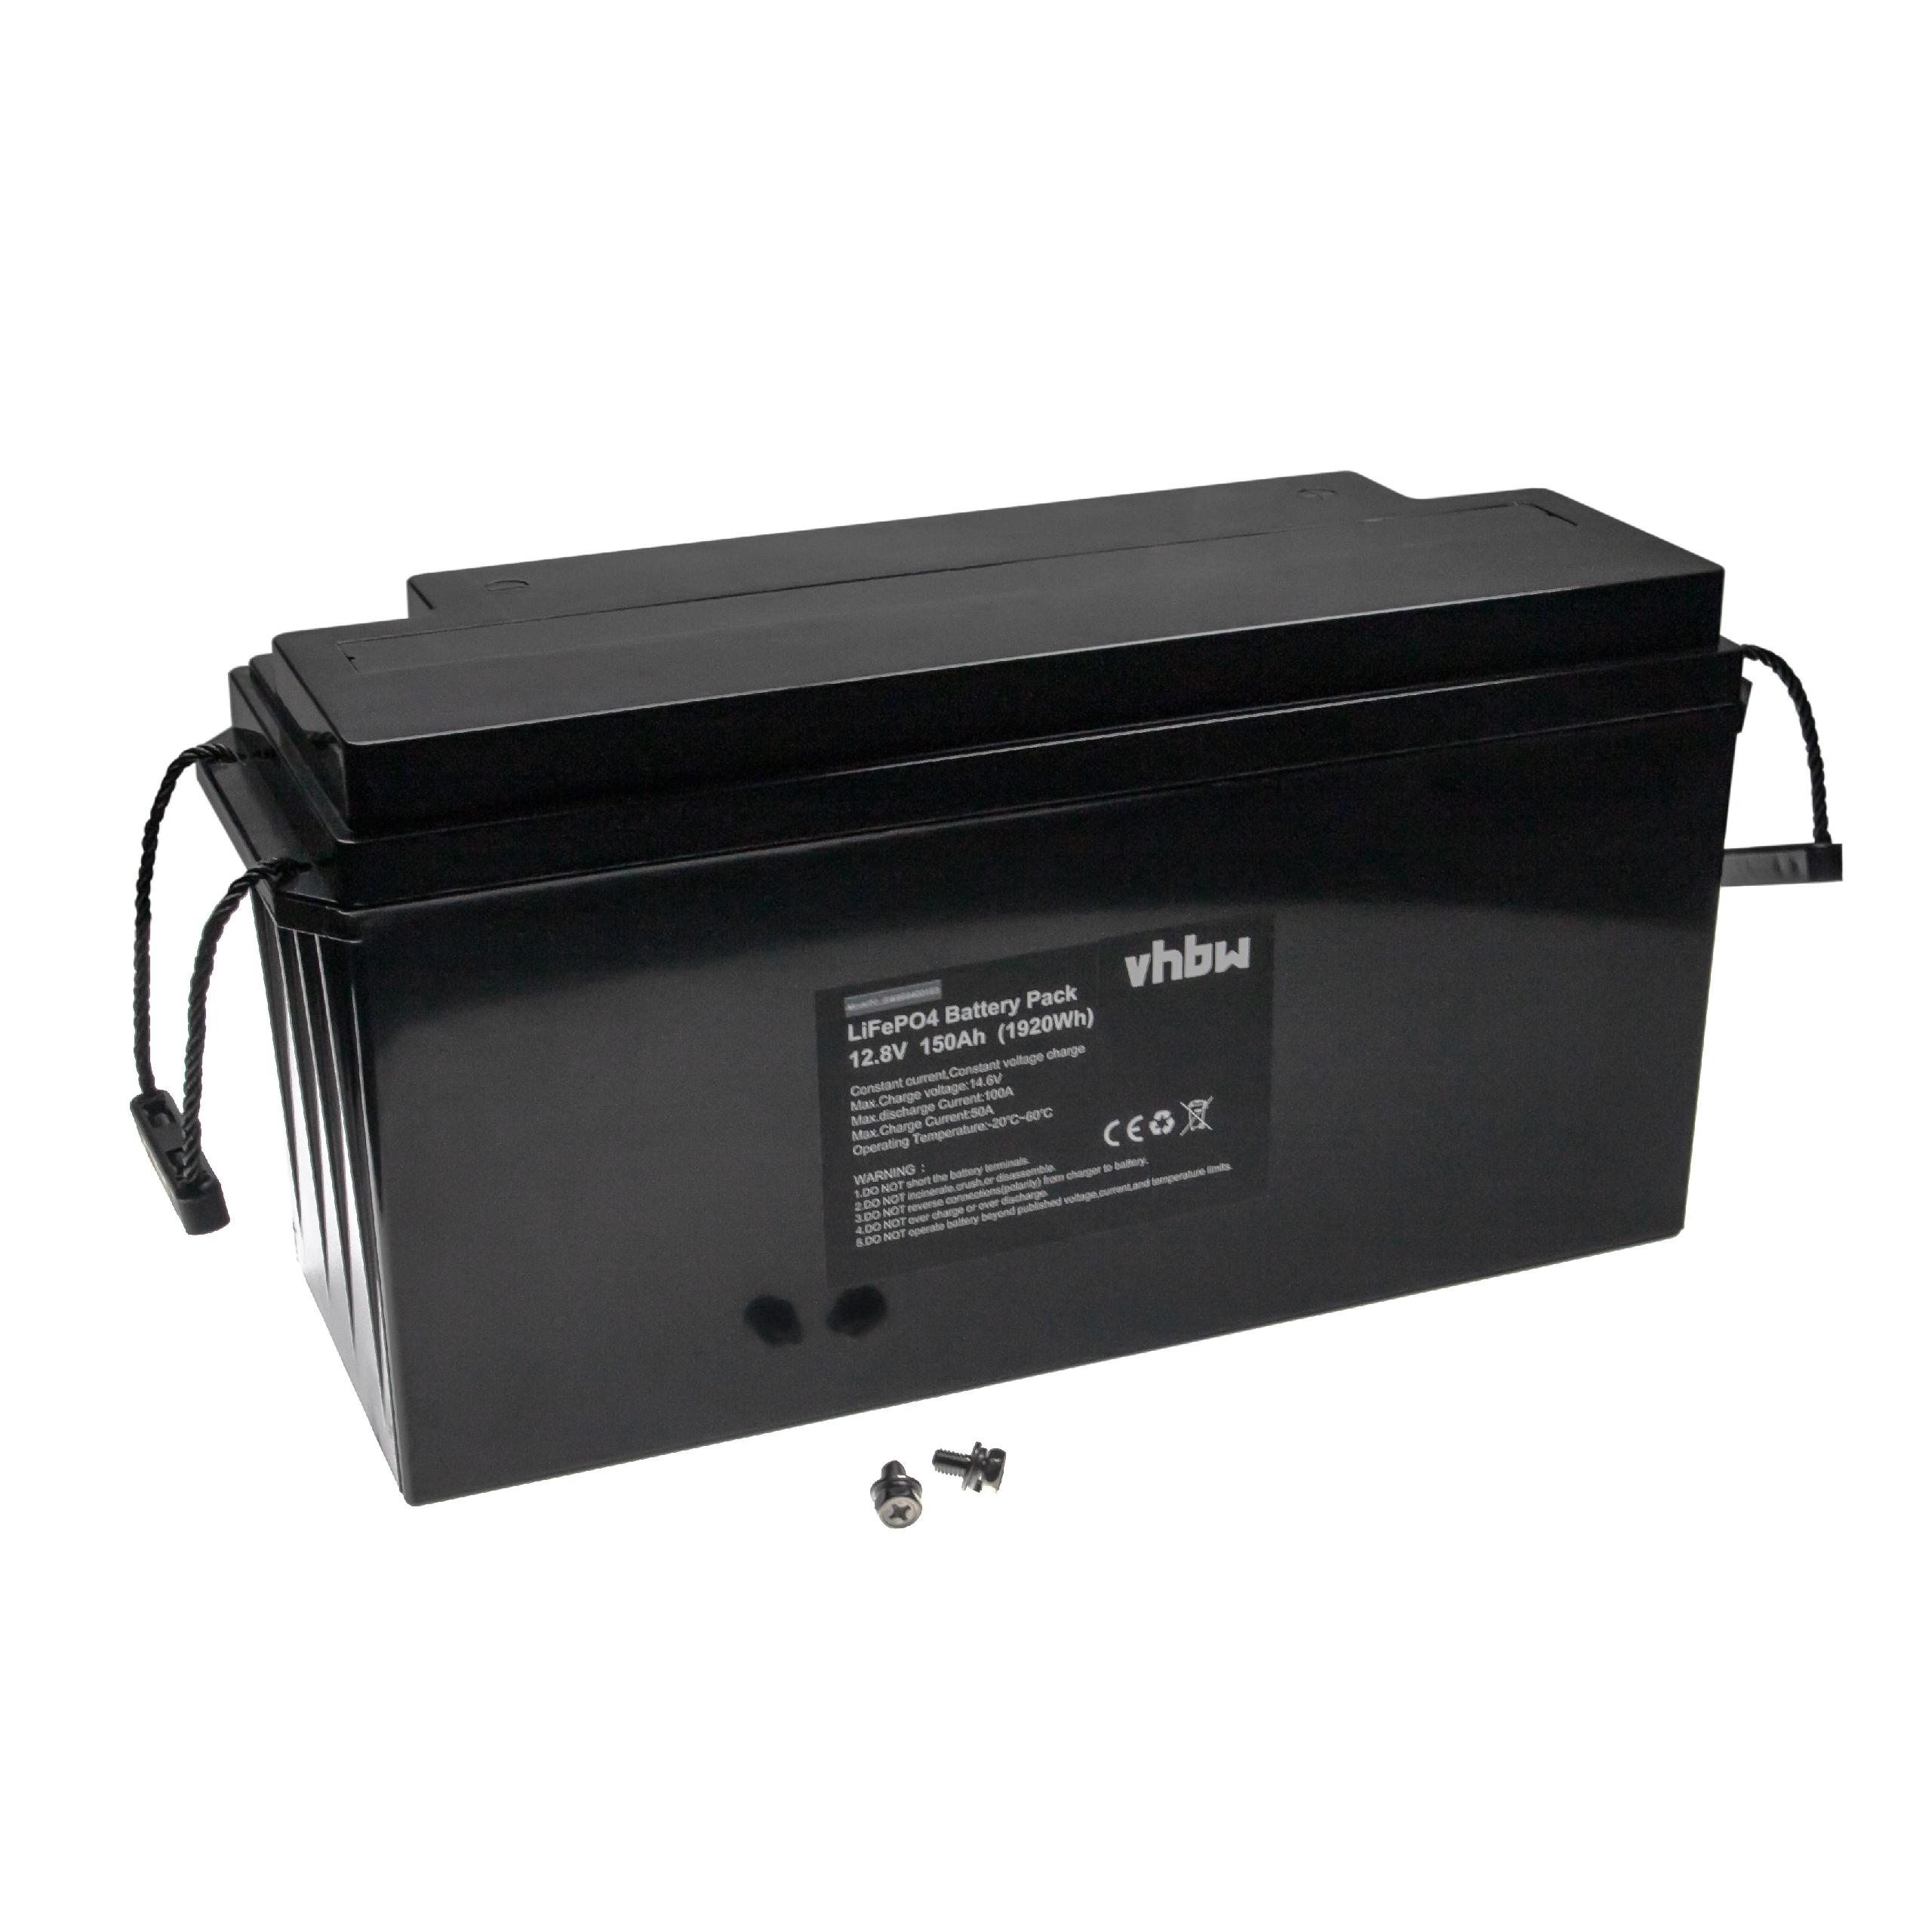 Bordbatterie Akku passend für Wohnmobil, Boot, Solaranlage - 150 Ah 12,8V LiFePO4, 150000mAh, schwarz